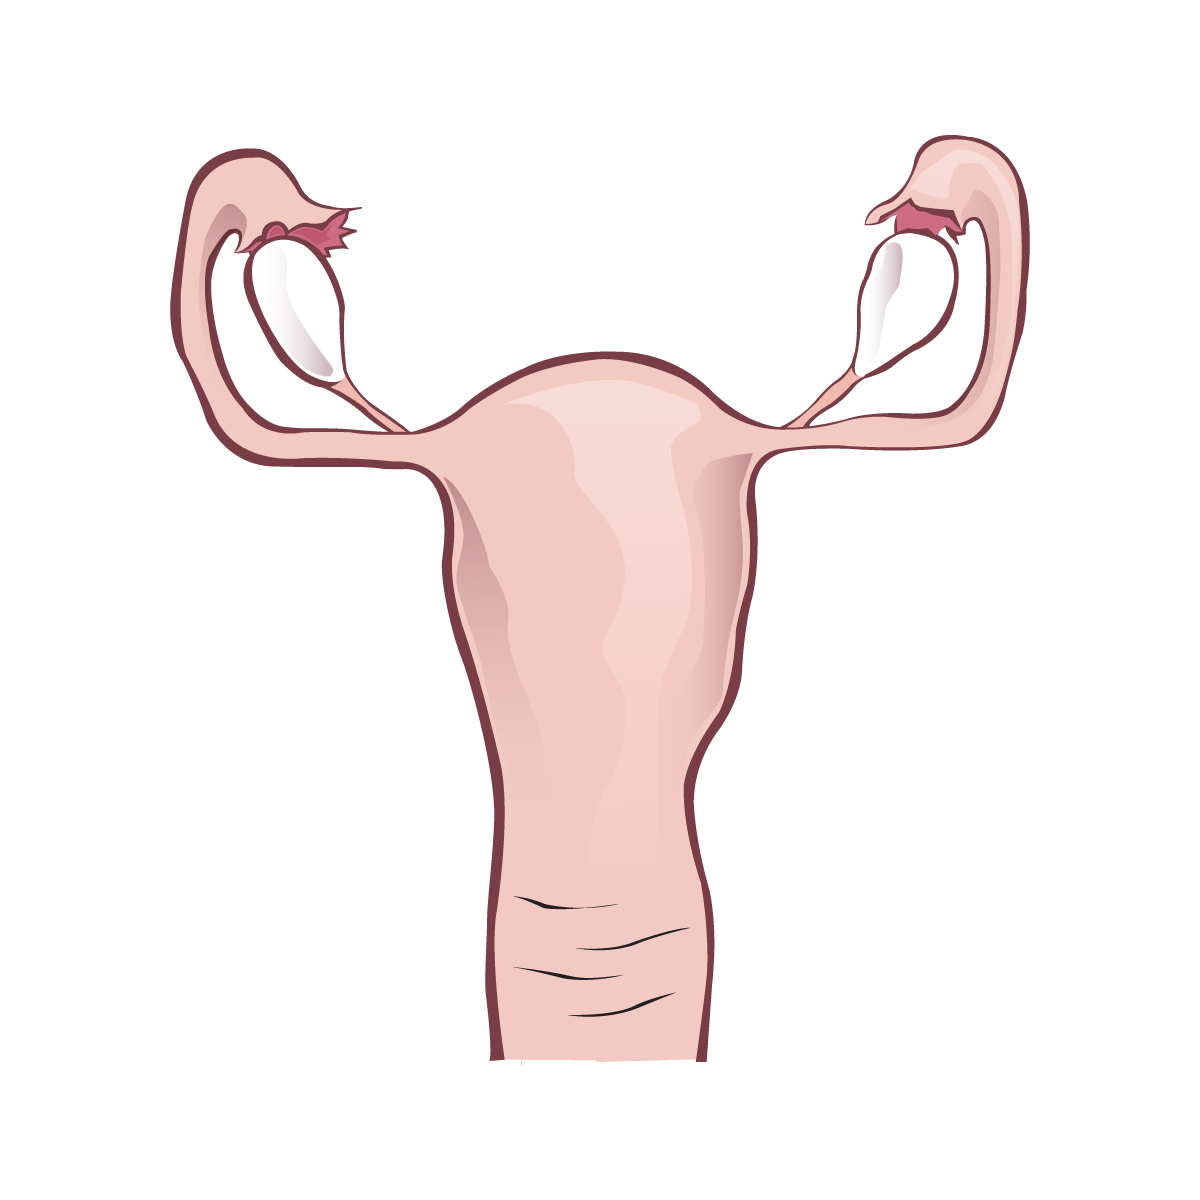 Illustration of the ovaries and uterus